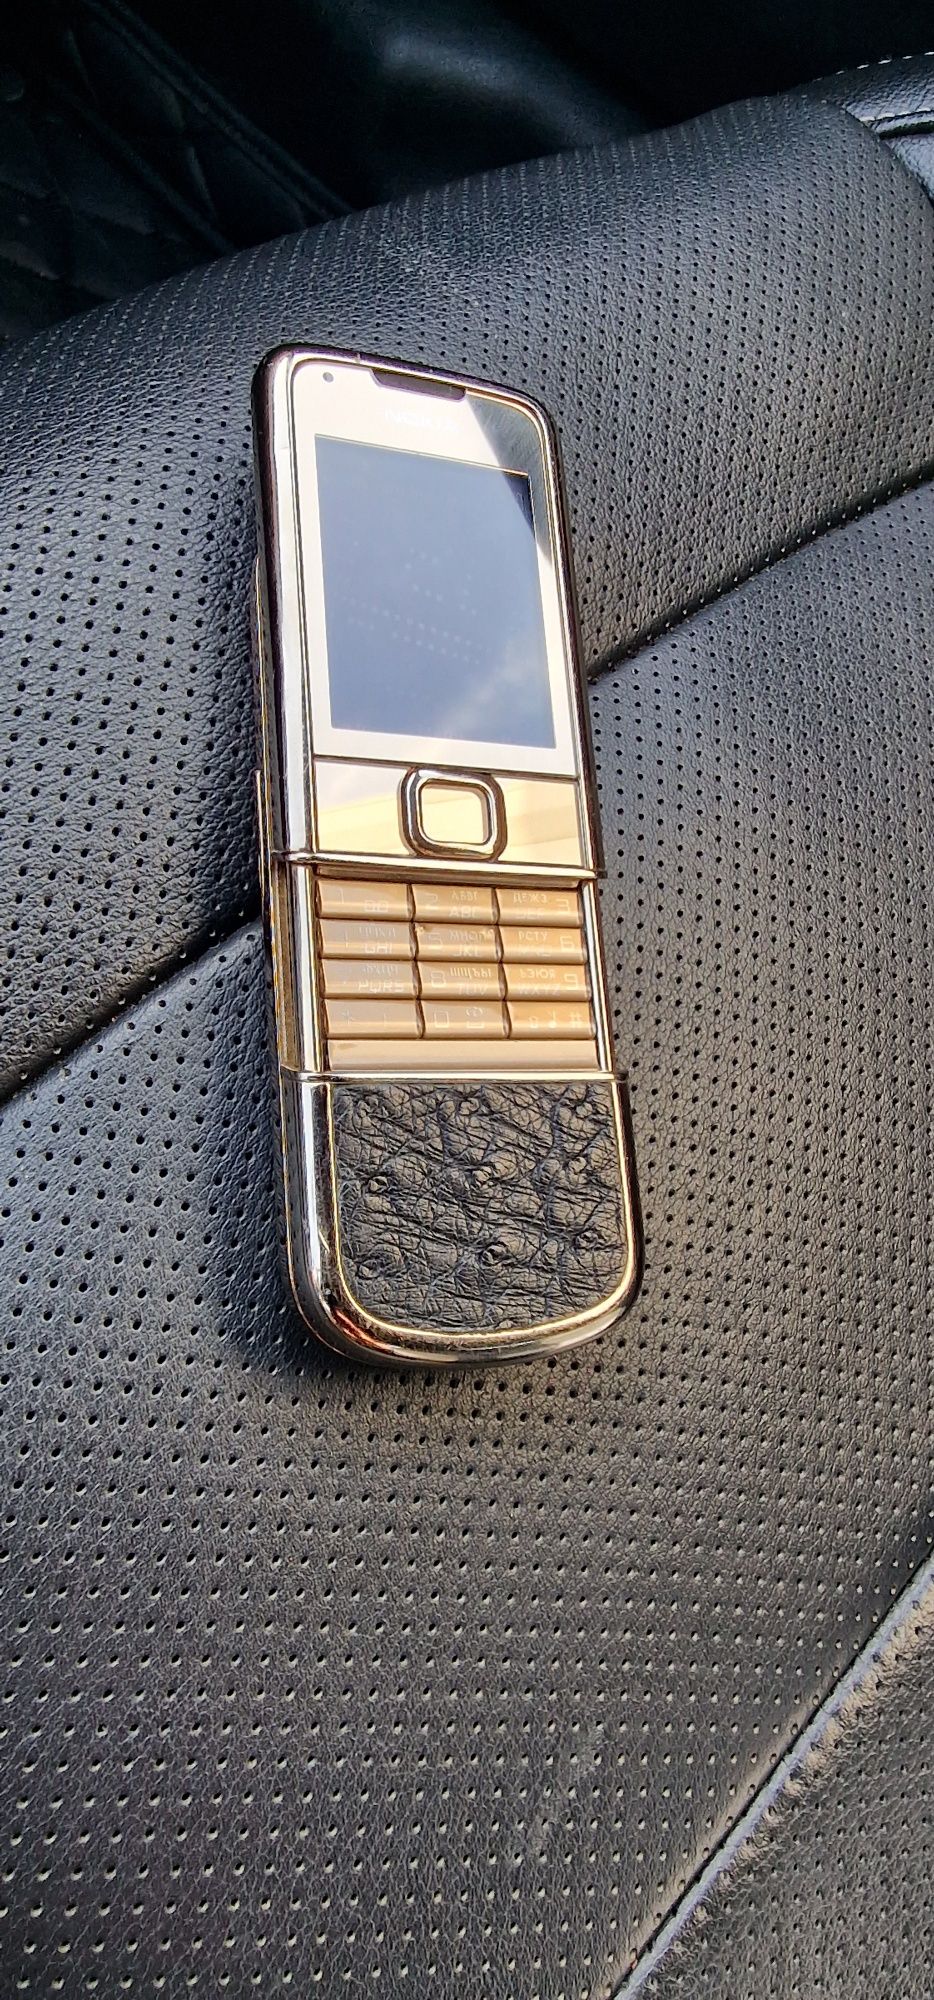 Nokia 8800 arte gold оригинал